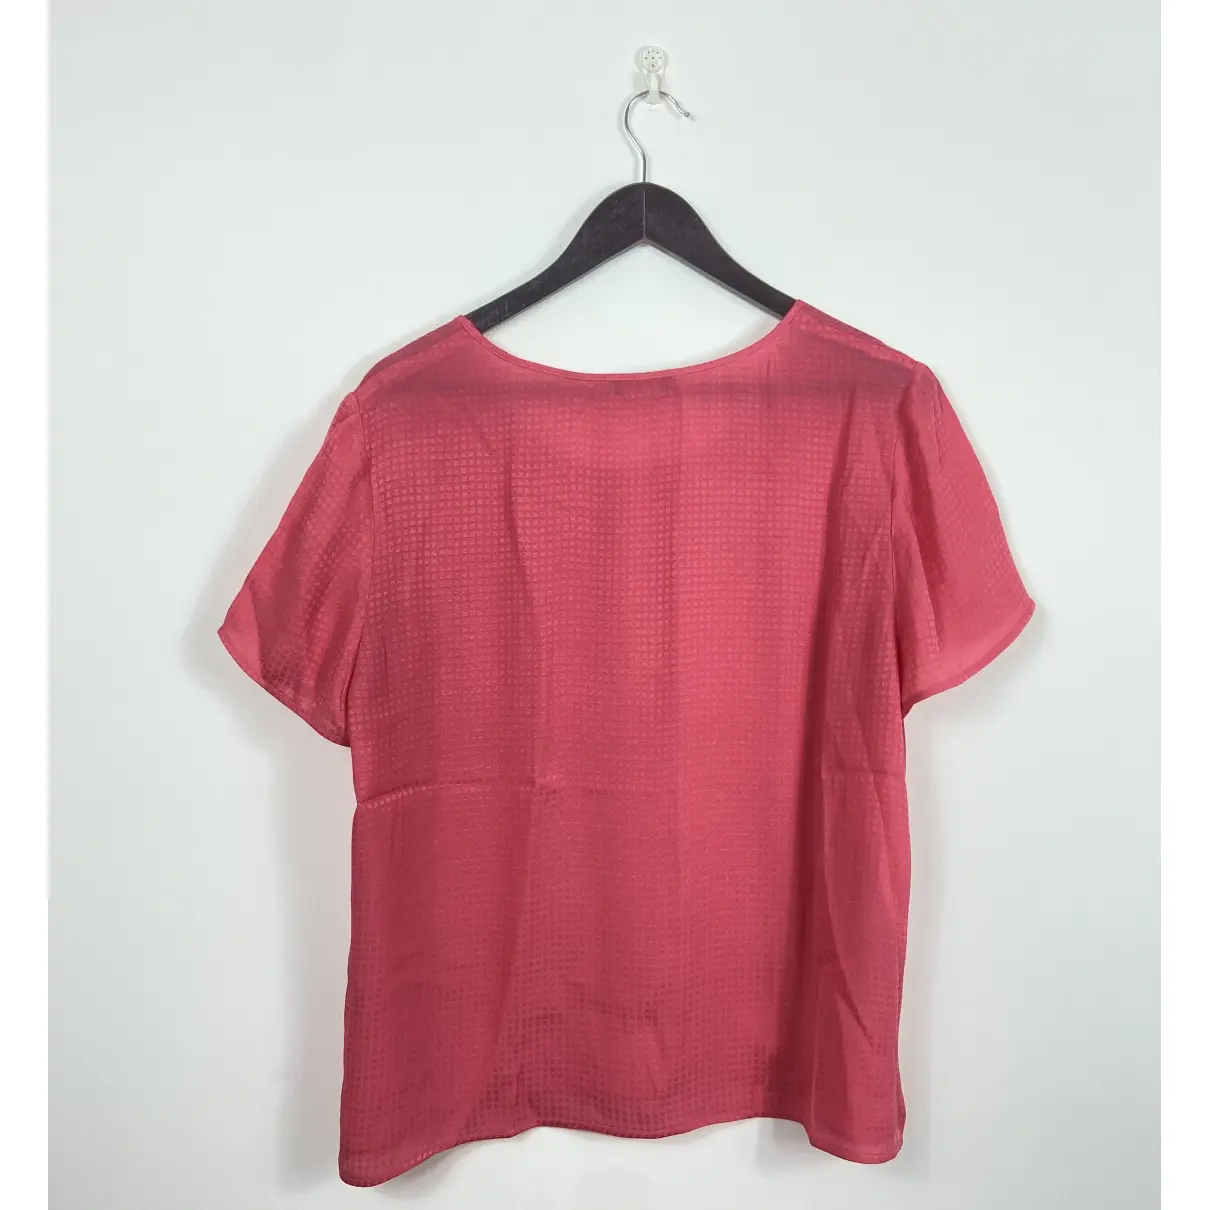 Buy Emporio Armani Silk blouse online